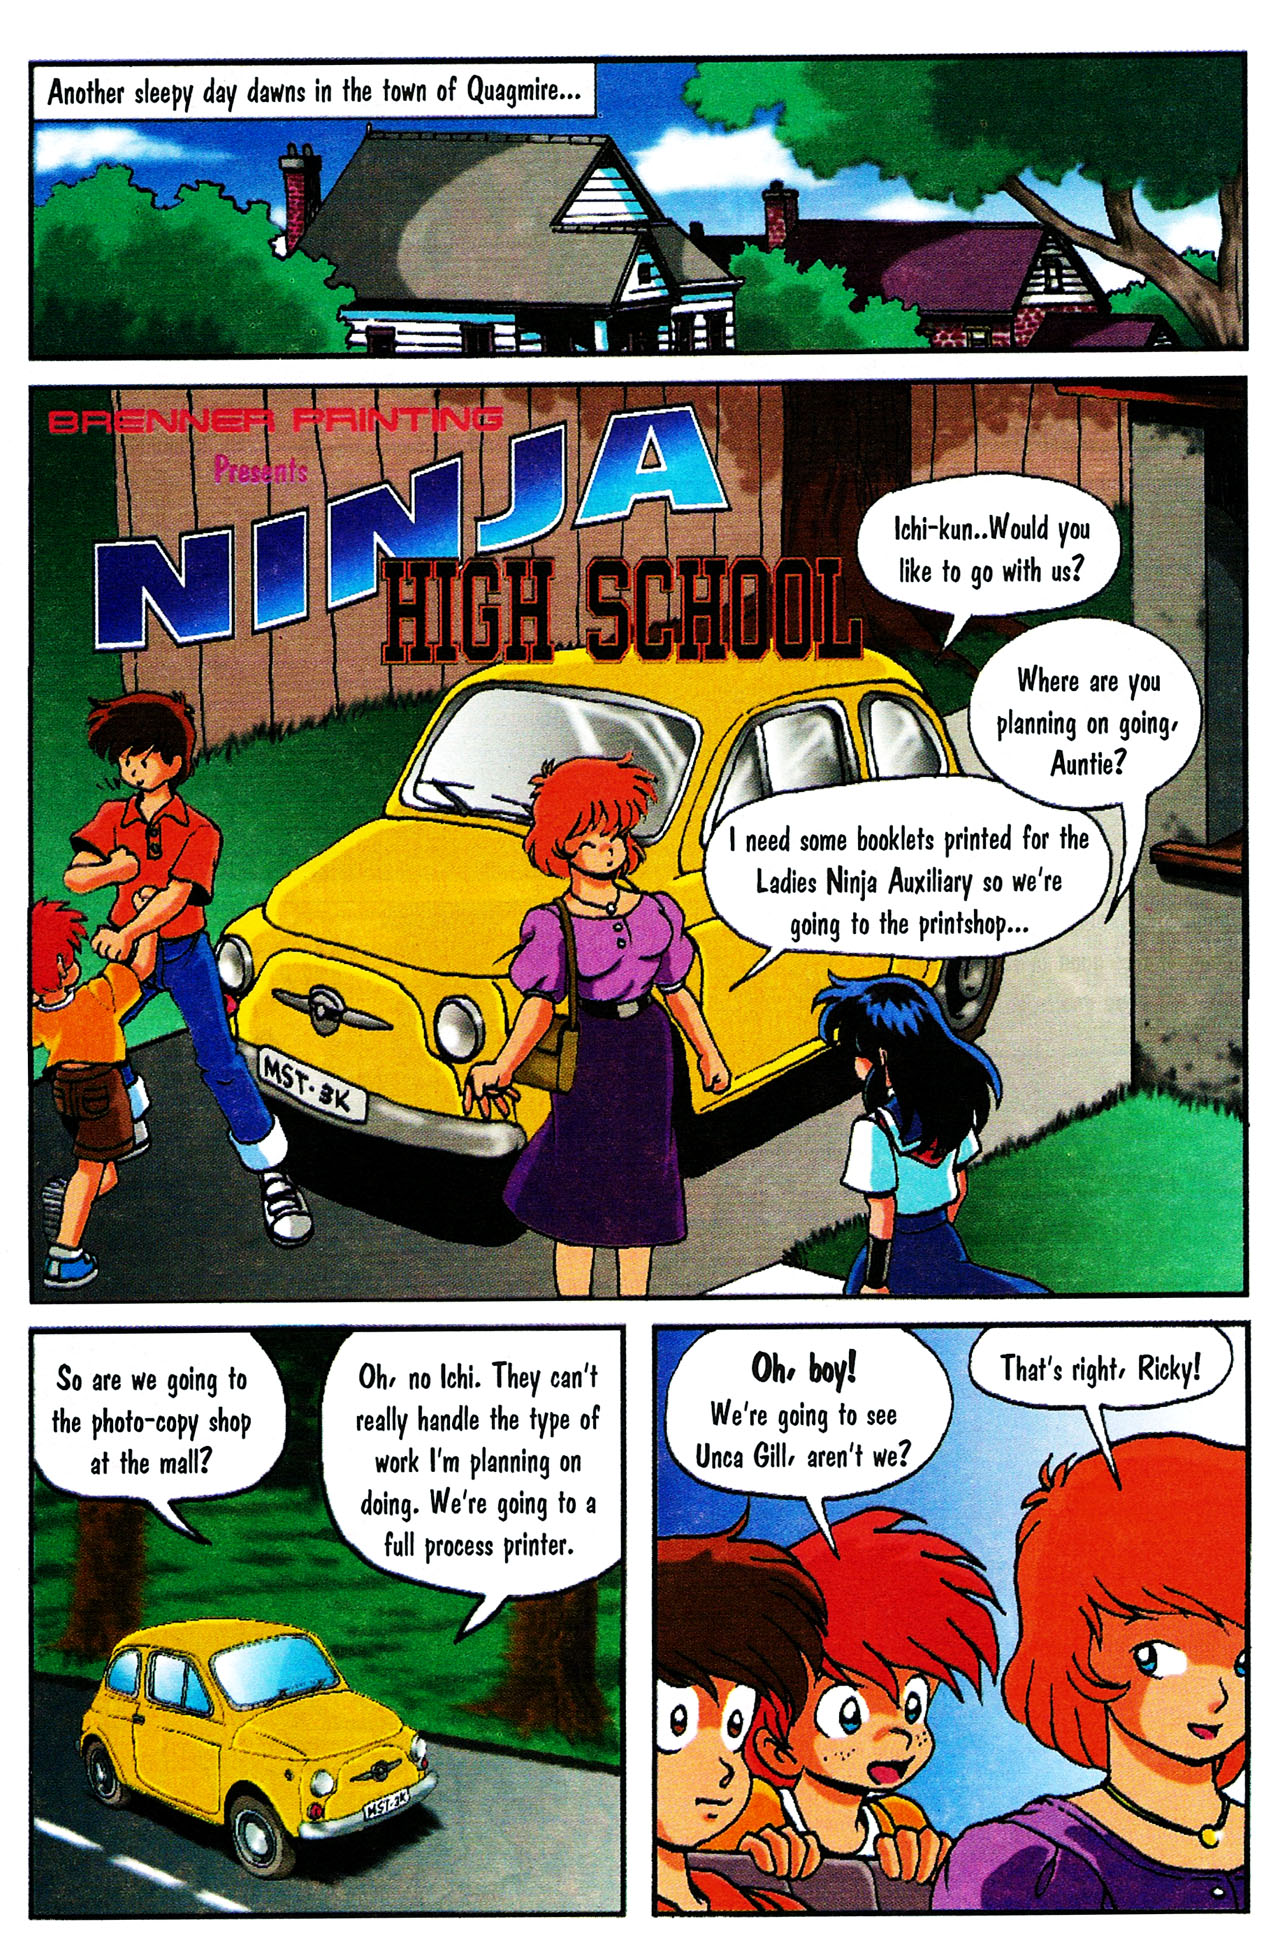 Read online Brenner Printing Presents Ninja High School Talks About Comic Book Printing comic -  Issue # Full - 3